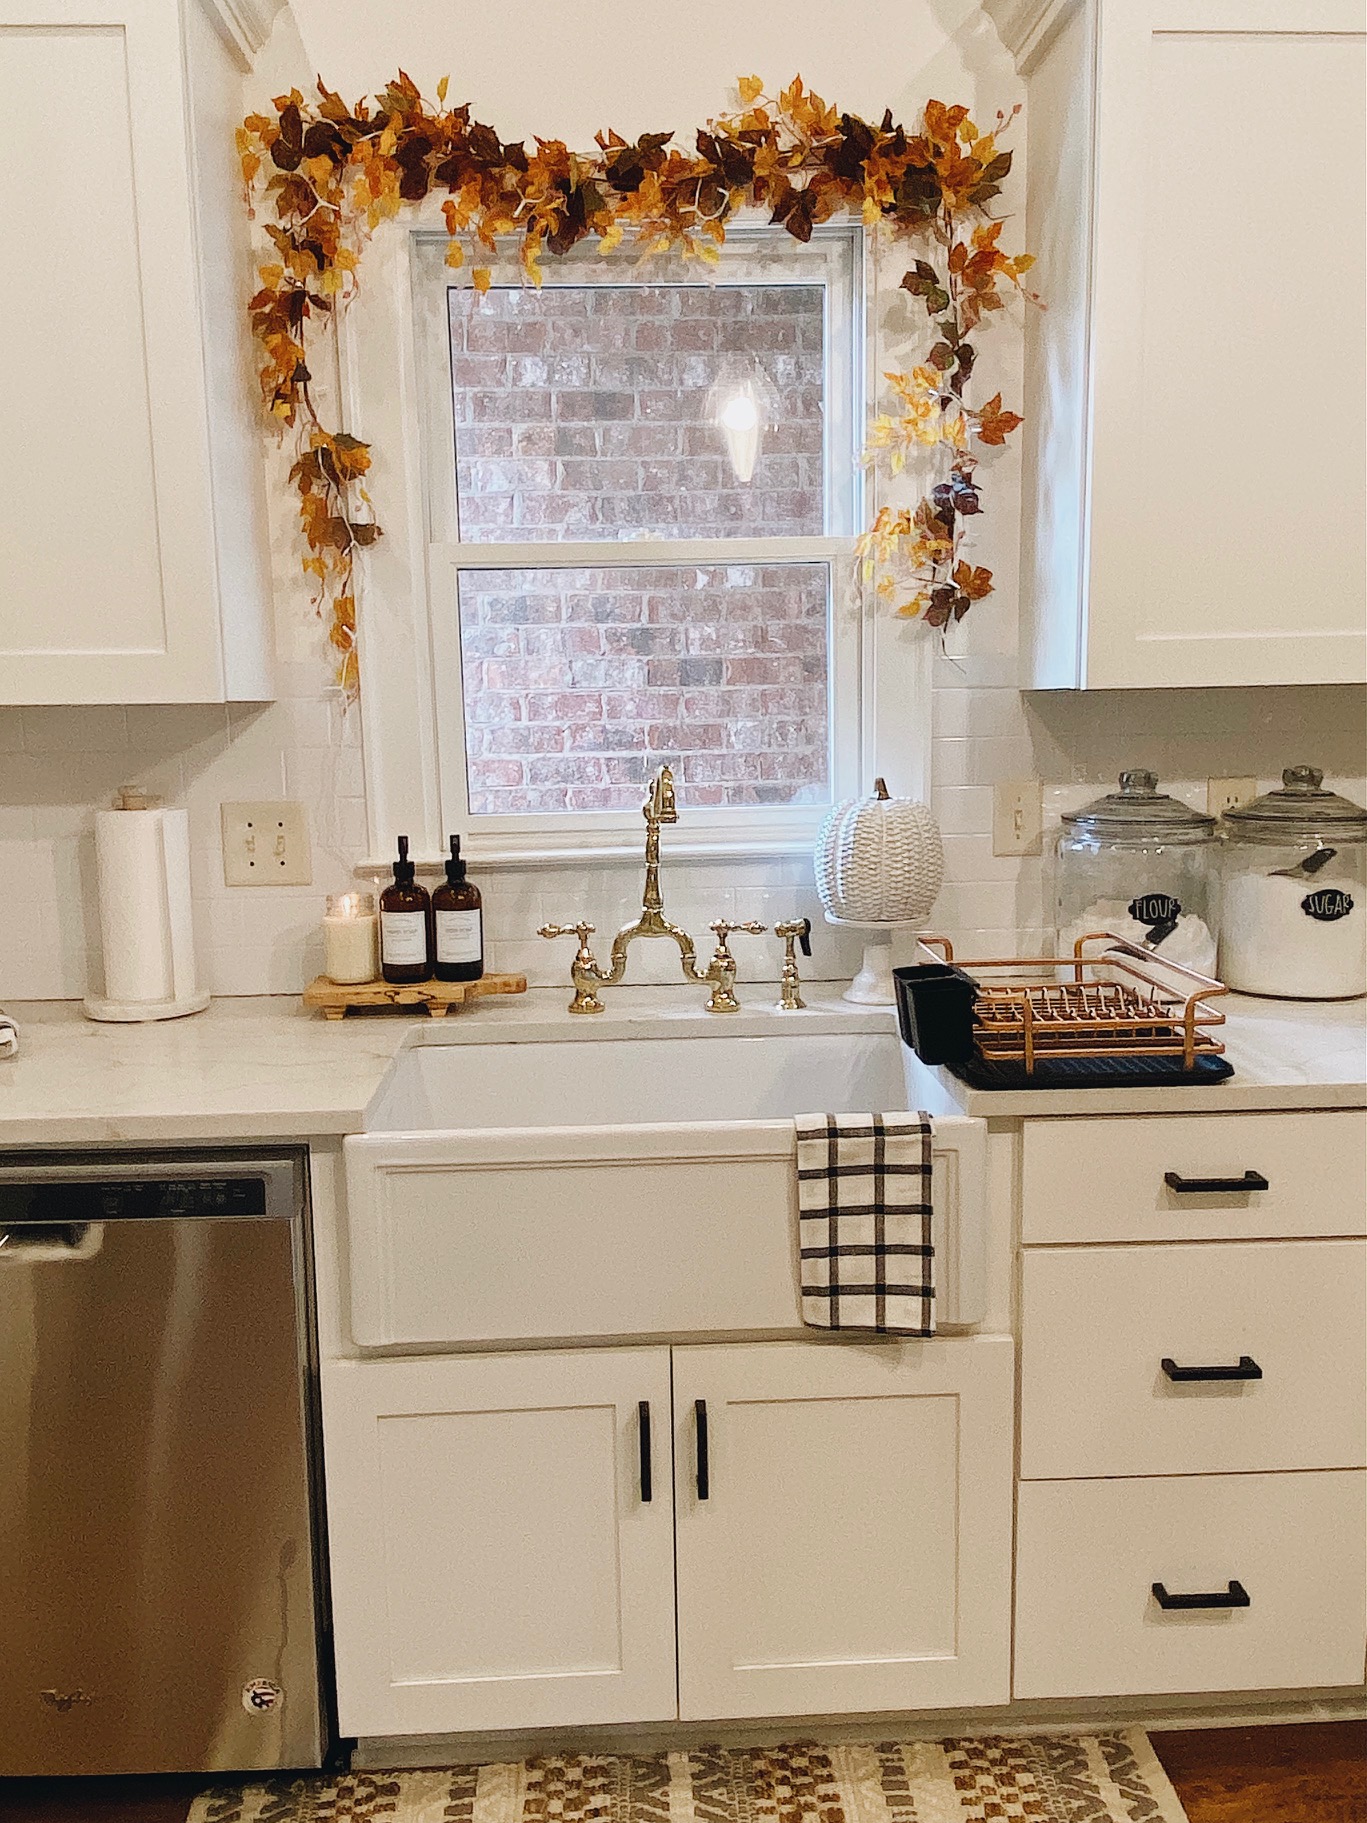 alfiler ligeramente subterráneo 5 Cozy Farmhouse Kitchen Decor Ideas for Fall | She Gave It A Go